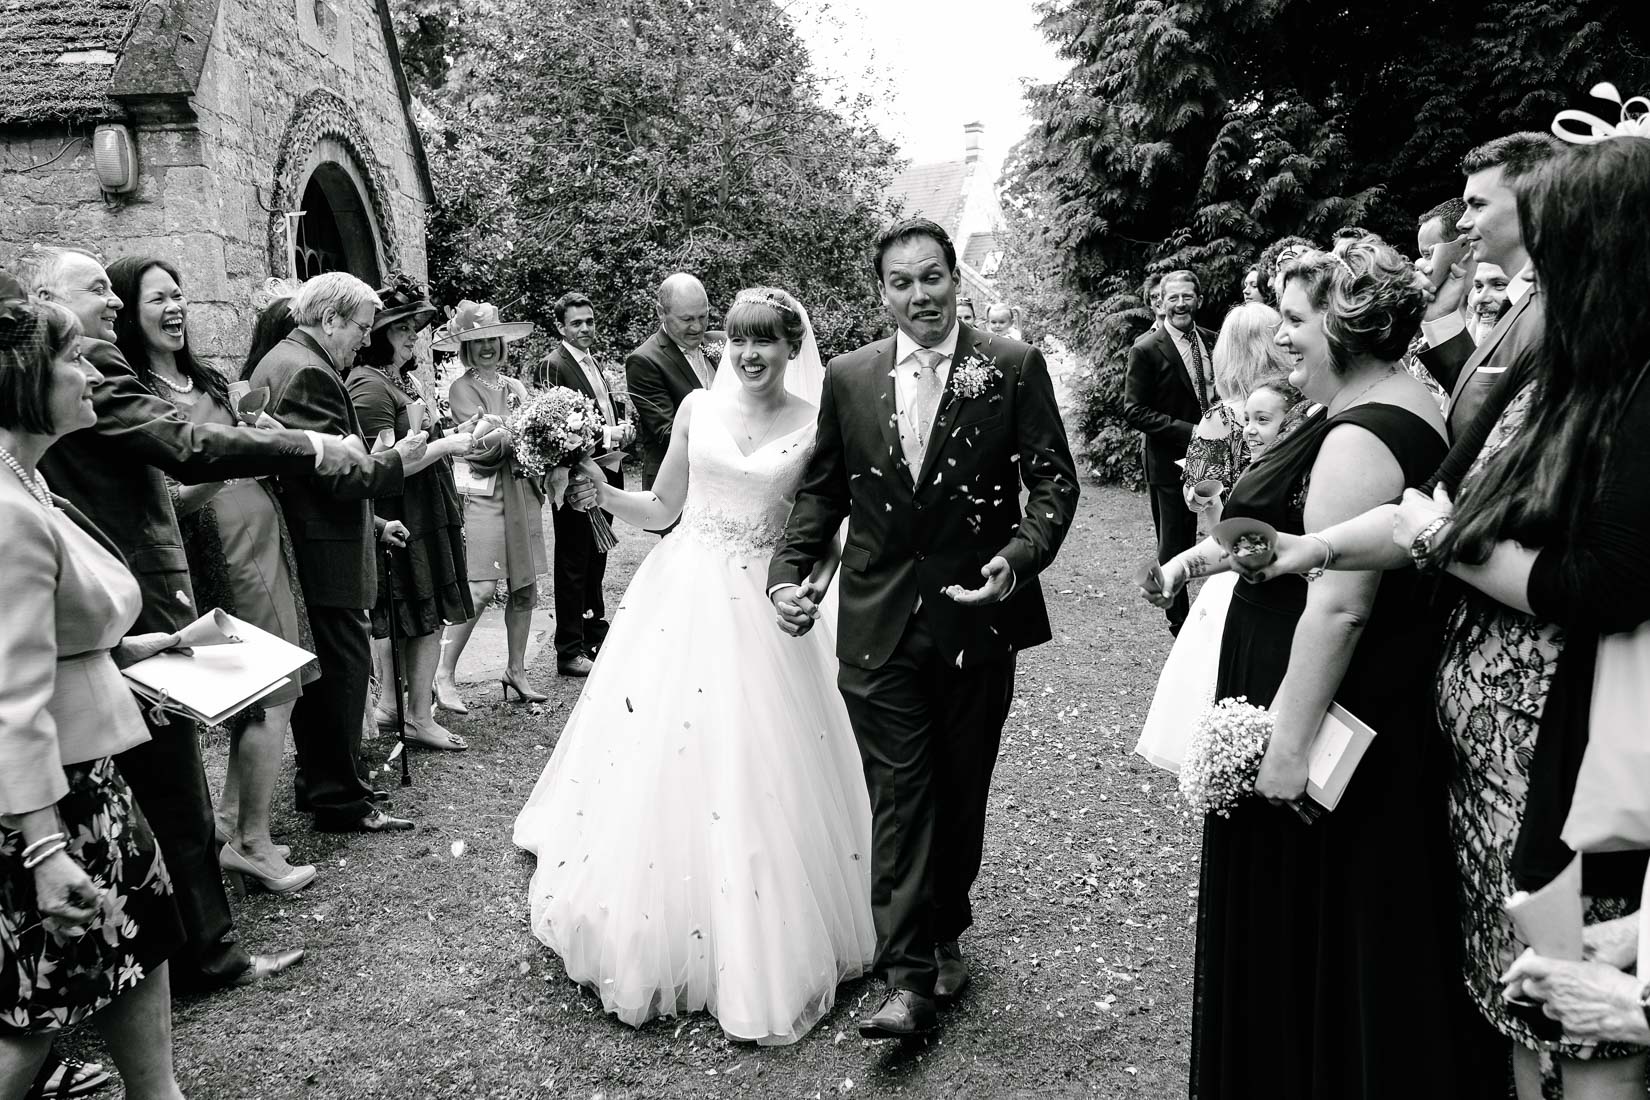  The Wedding of Ella and Jev Pemberthy, Mixbury 